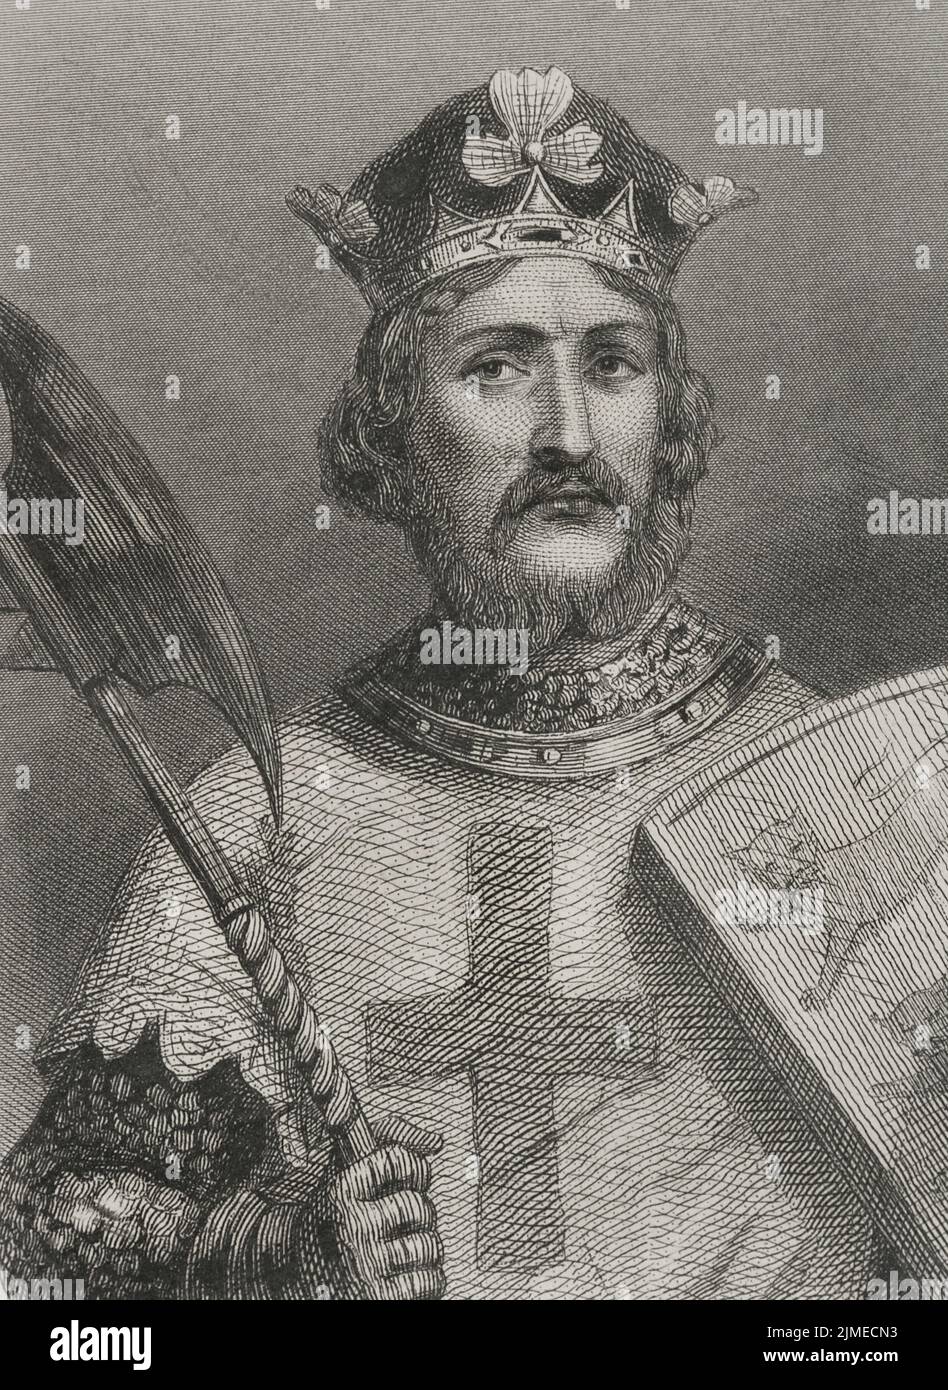 Richard I (1157-1199). King of England (1189-1199), nicknamed Richard the Lionheart. House of Plantagenet. Portrait. Engraving. 'Historia Universal', by César Cantú. Volume III, 1855. Stock Photo